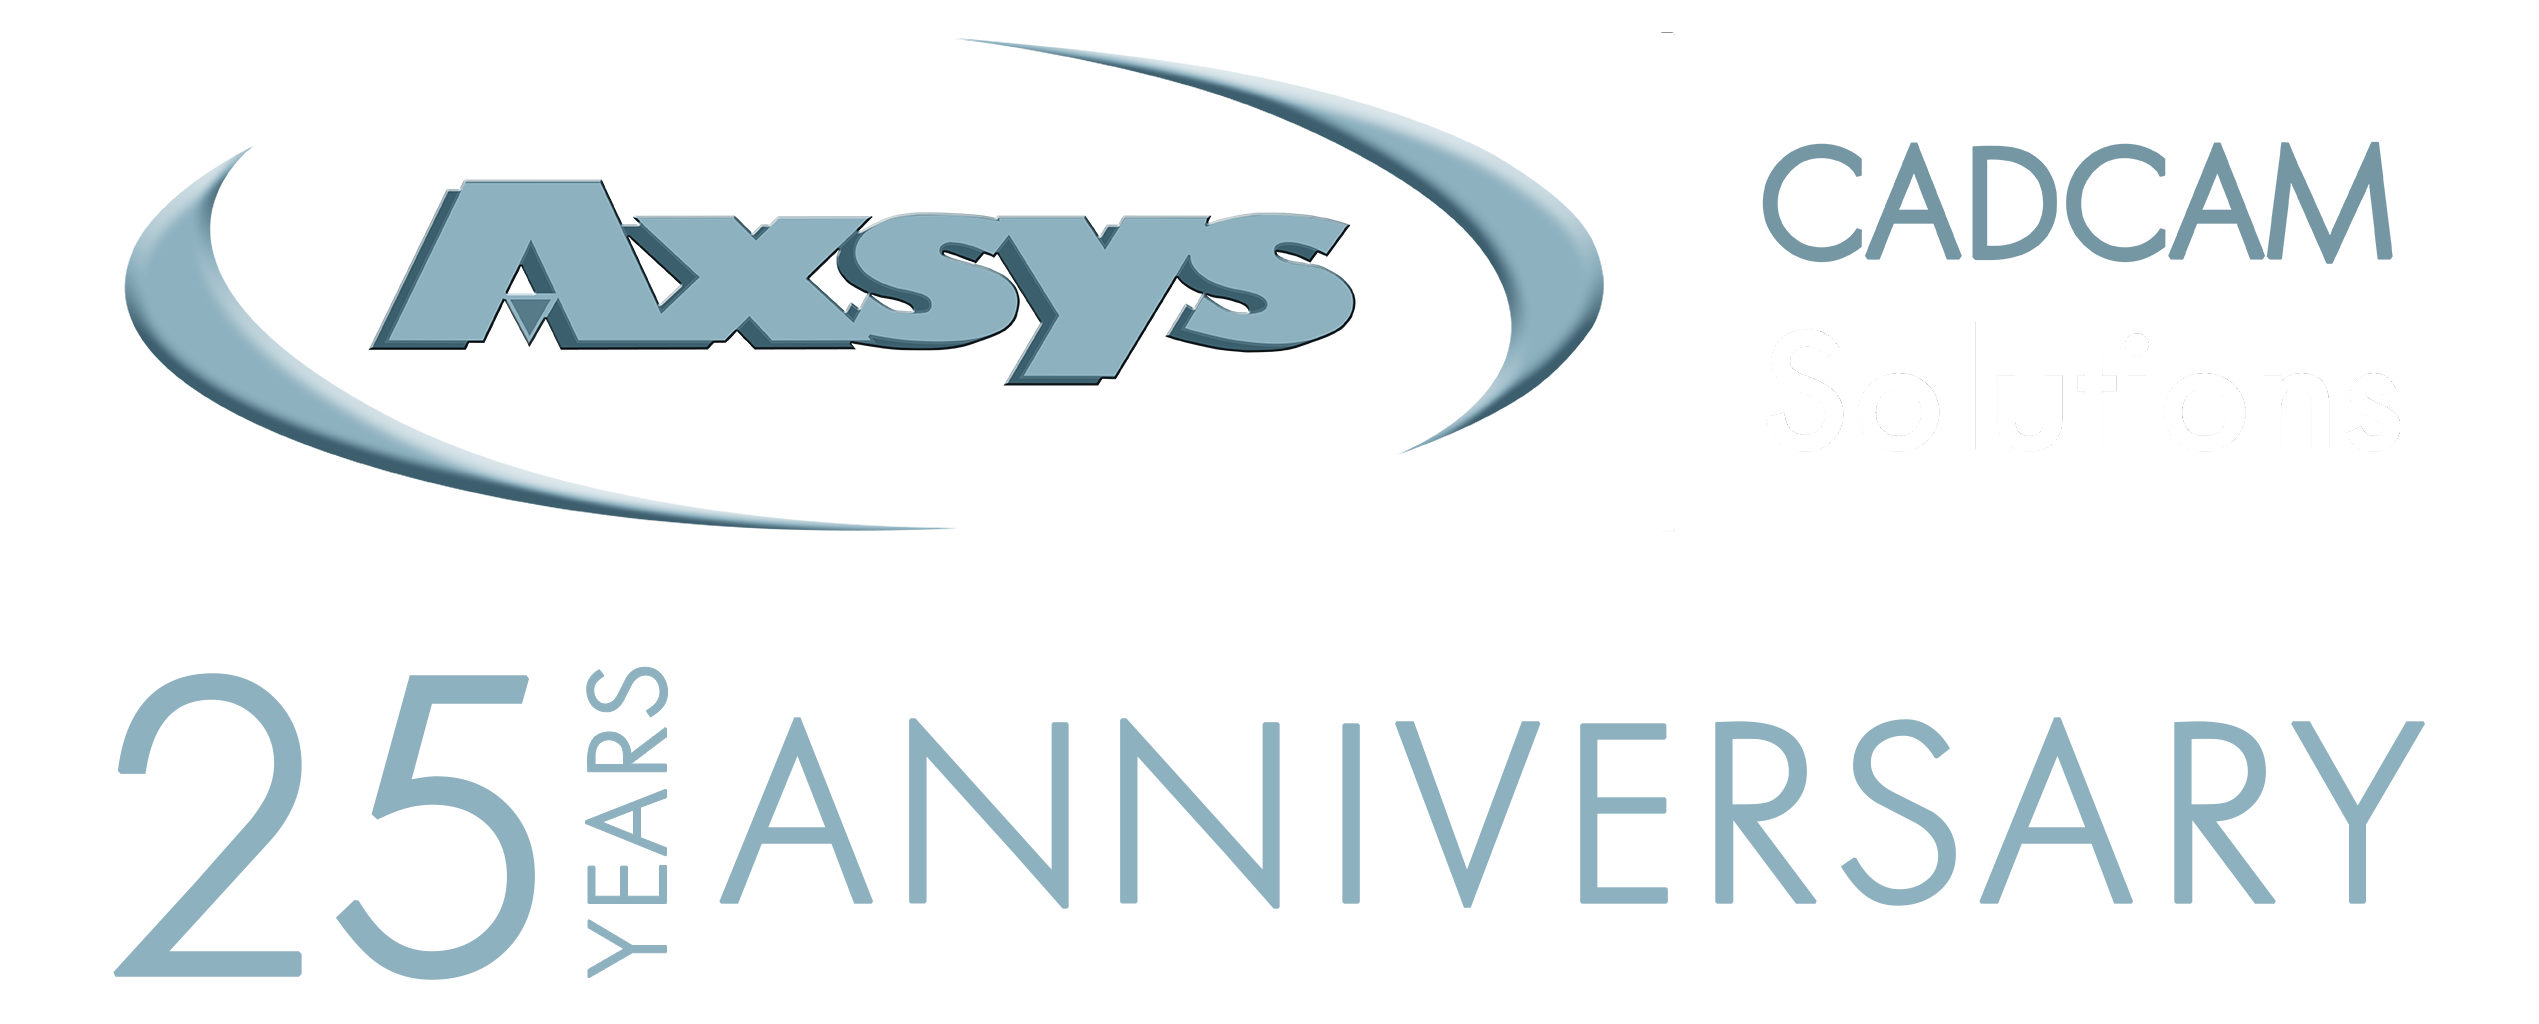 Axsys CAD/CAM Solutions Logo